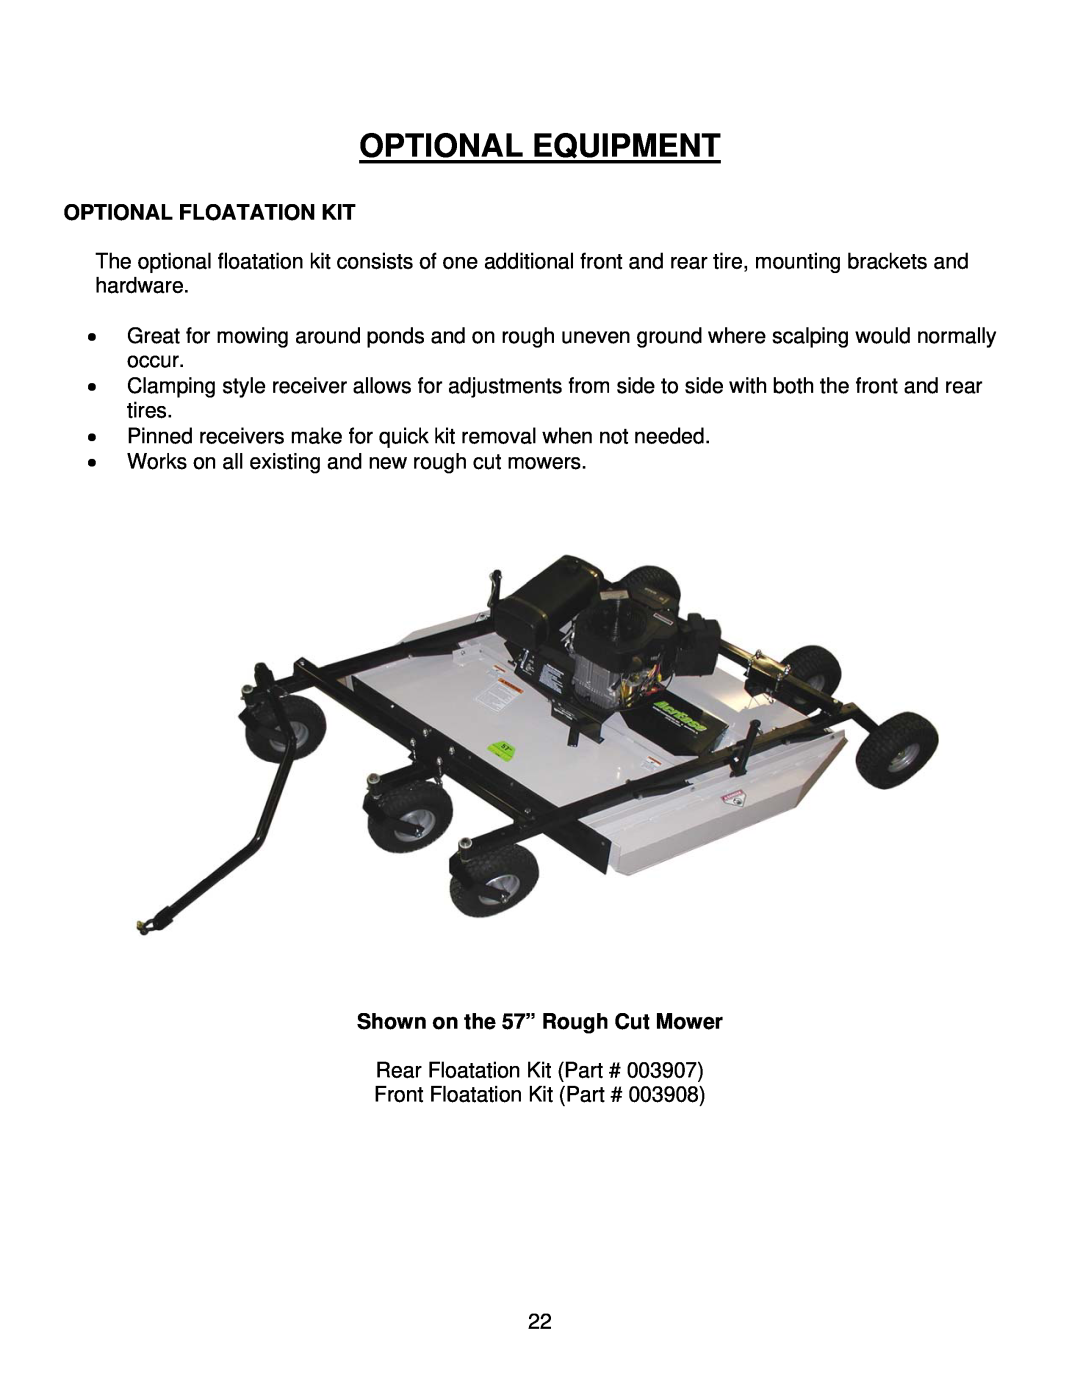 Kunz MR44K, MR44B owner manual Optionaluequipment, Optional Floatation Kit, Shown on the 57” Rough Cut Mower 